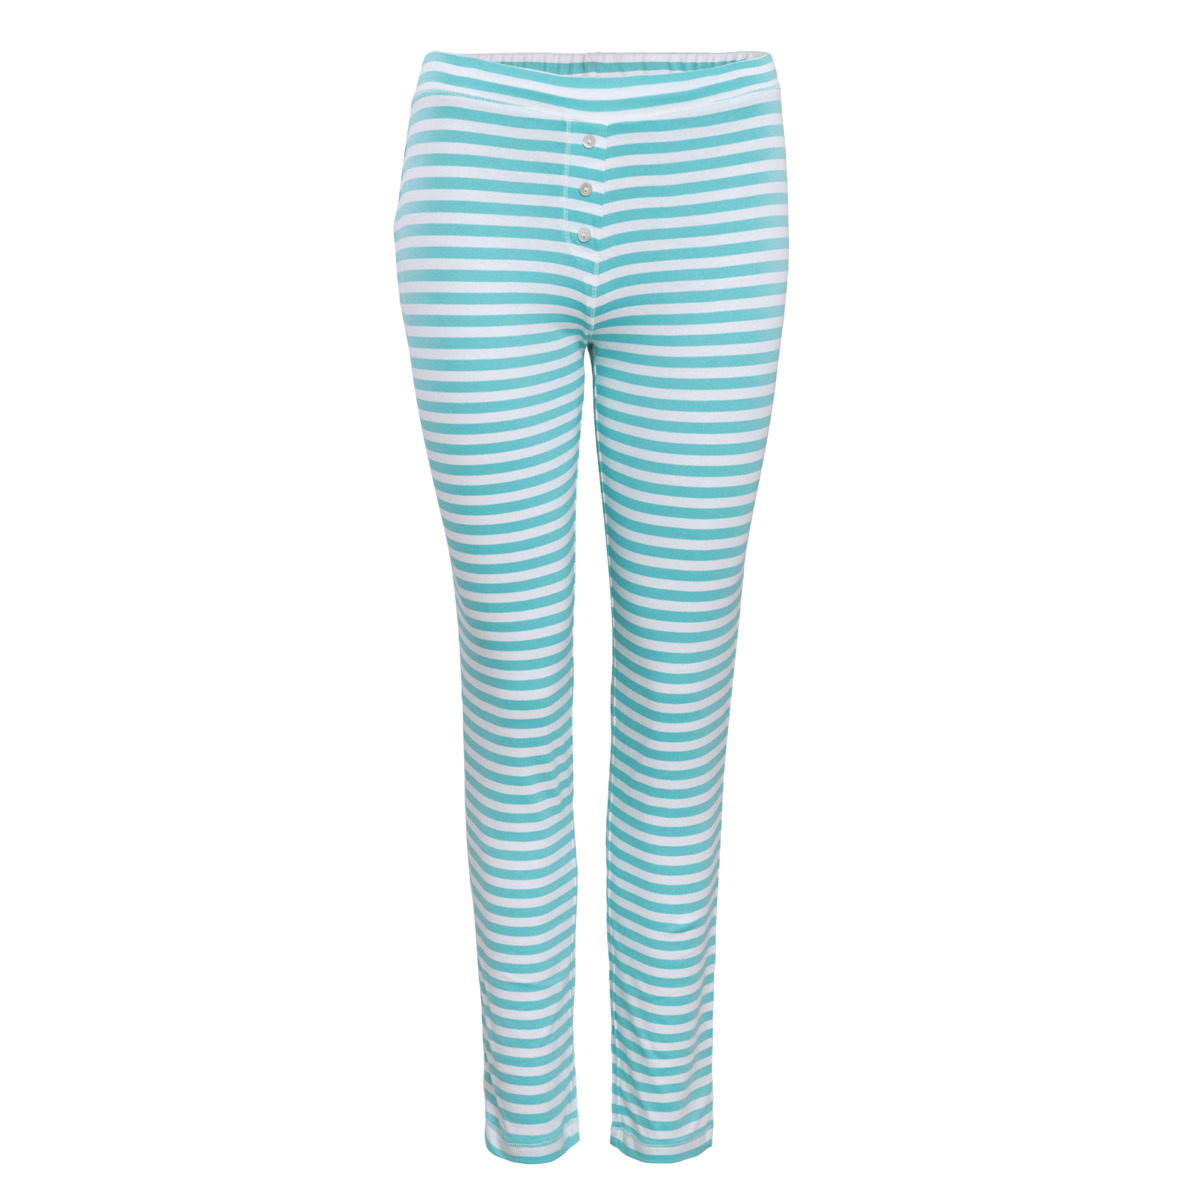 Striped Sleep trousers, CAROL